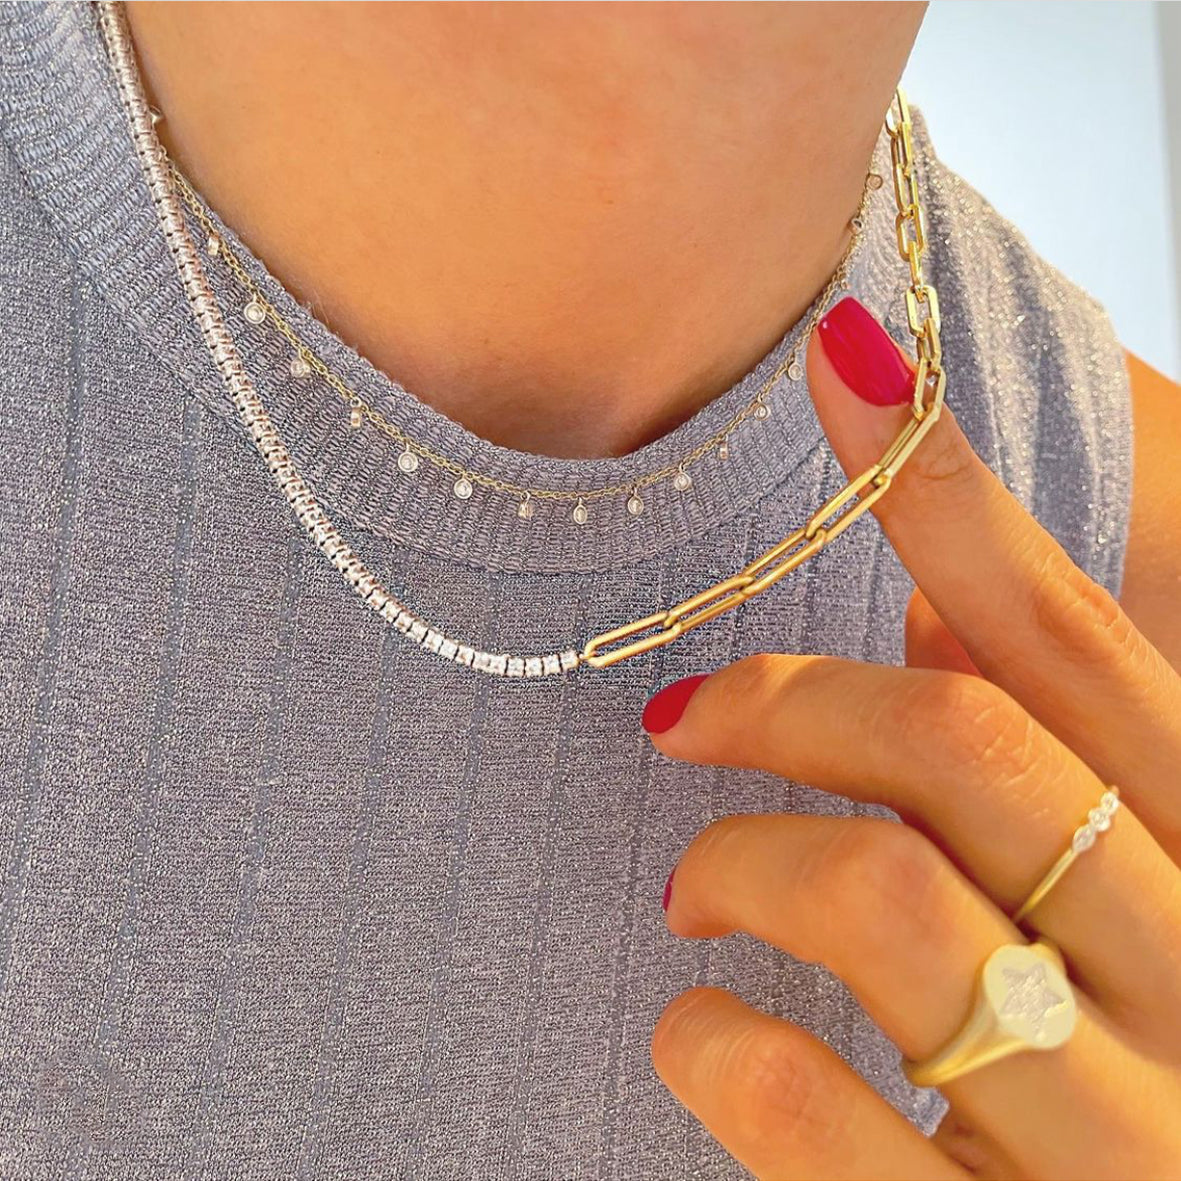 18K White Gold Diamond Half Tennis Necklace - Nazar's & Co. Jewelers